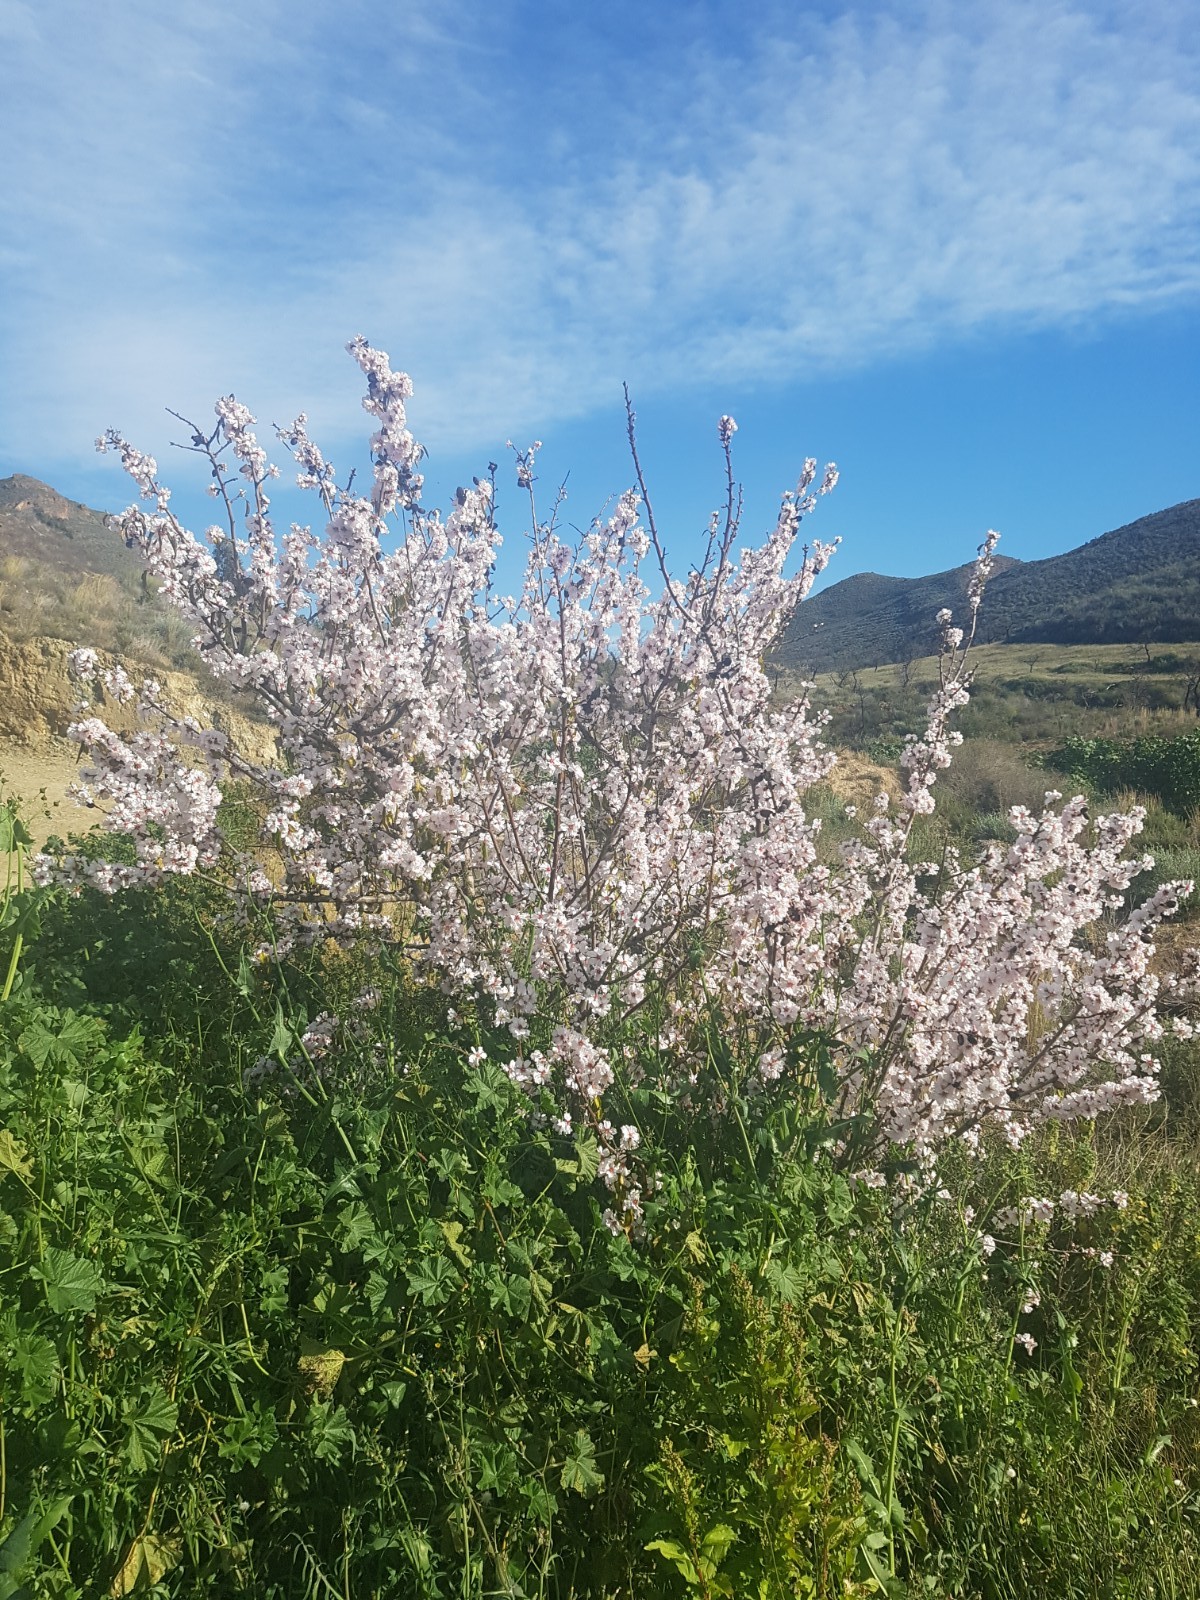 Almond tree in bloom